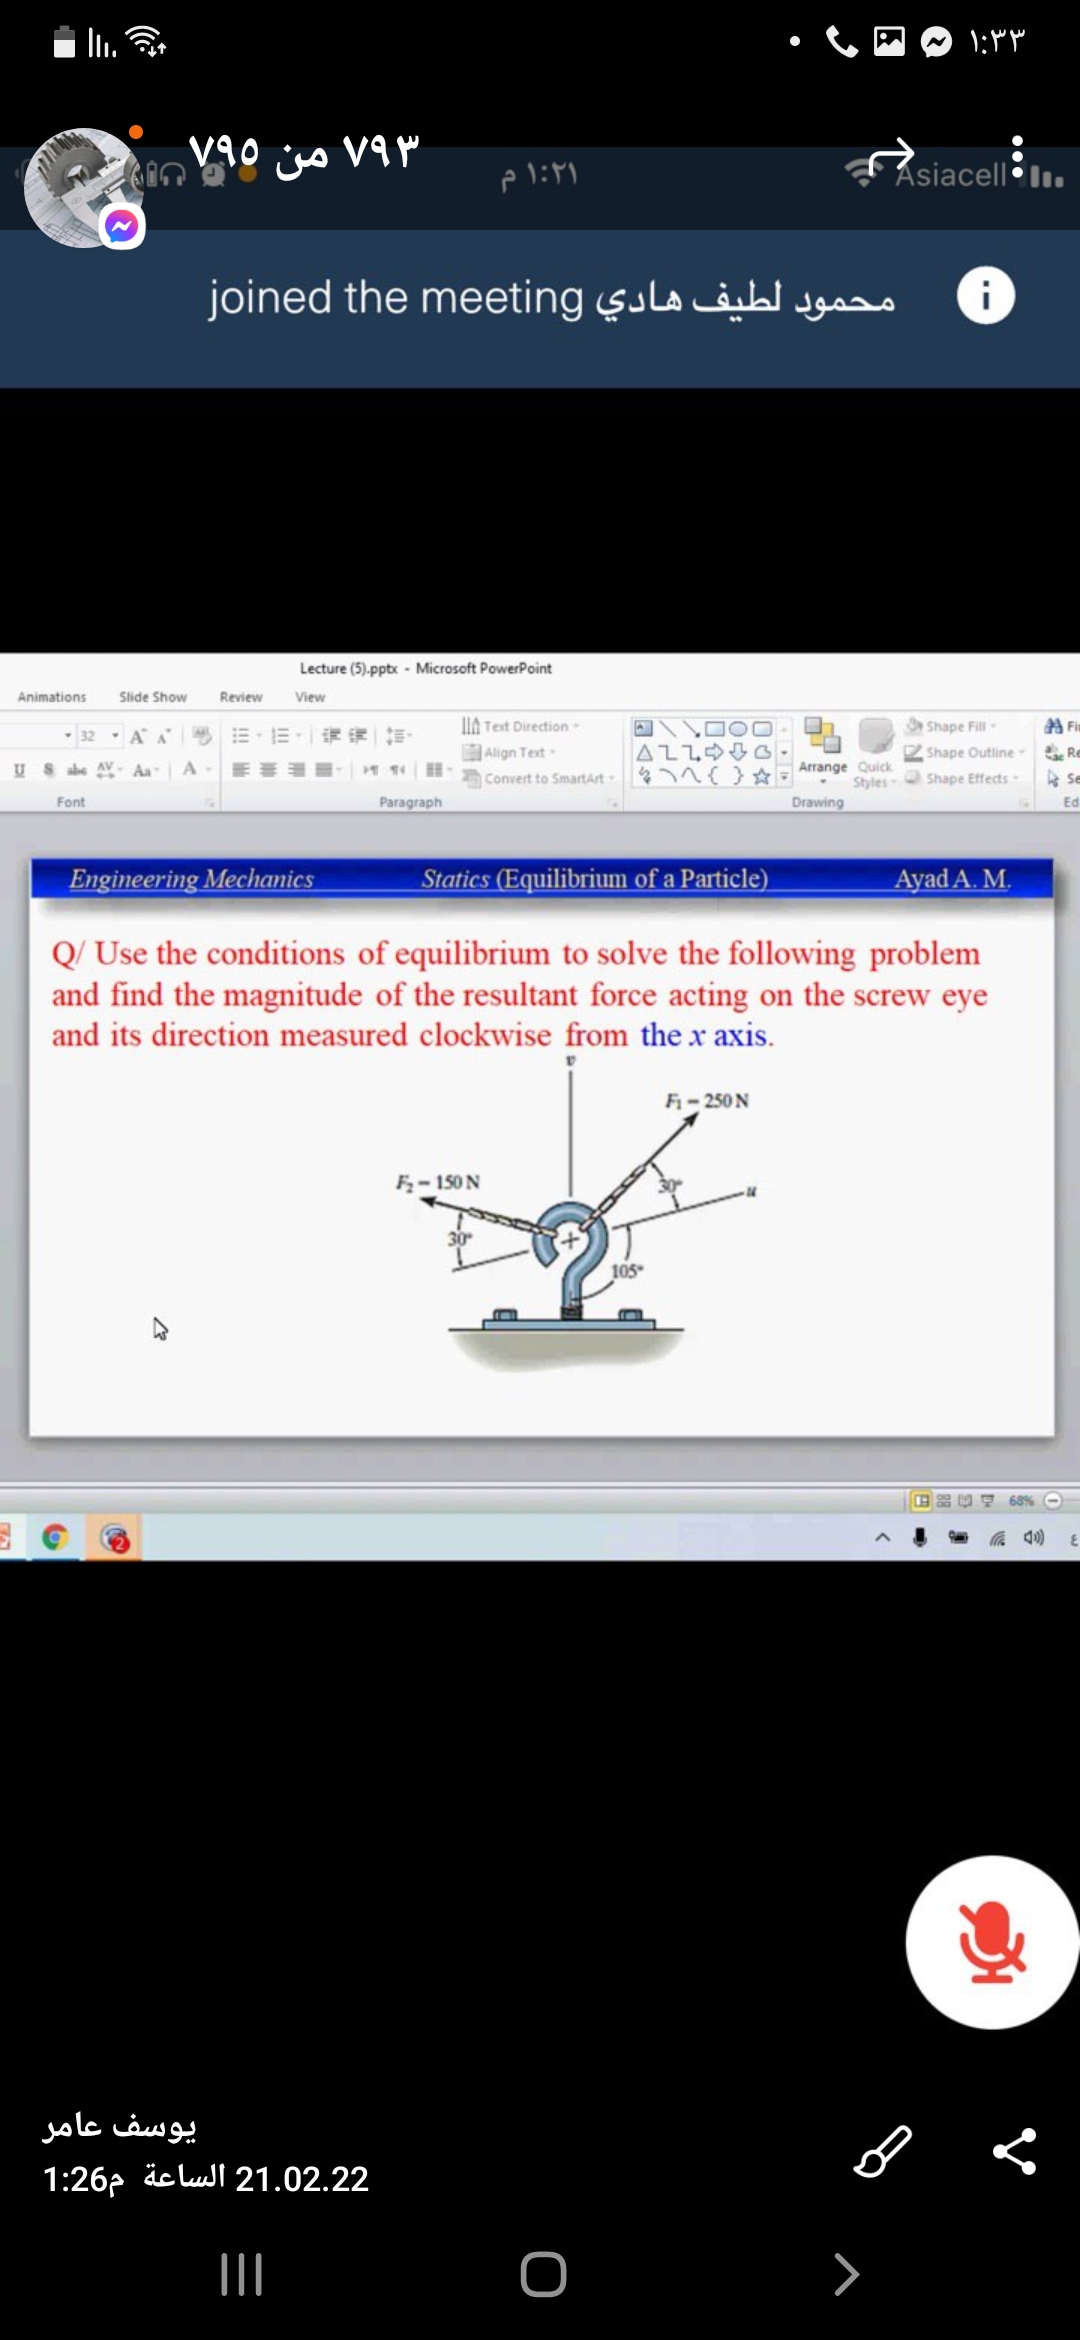 ۱:۳ ۳
من
Asiacell l.
joined the meeting sula äibt Jgsso
Lecture (5).pptx - Microsoft PowerPoint
Animations
Slide Show
Review
View
IIA Text Direction -
Shape Fill-
A Fi
32, AA =,三,|评一前。
AZLOG
Align Text-
Convert to SmartArt { }*
Shape Outline
Re
Arrange Quick
Styles
Drawing
Aa
A
Shape Effects-
A Se
Font
Paragraph
Ed
Engineering Mechanics
Statics (Equilibrium of a Particle)
Ayad A. M.
Q/ Use the conditions of equilibrium to solve the following problem
and find the magnitude of the resultant force acting on the screw eye
and its direction measured clockwise from the x axis.
F- 250 N
F- 150 N
30
105
68%
یوسف عامر
1:26p iclul 21.02.22
